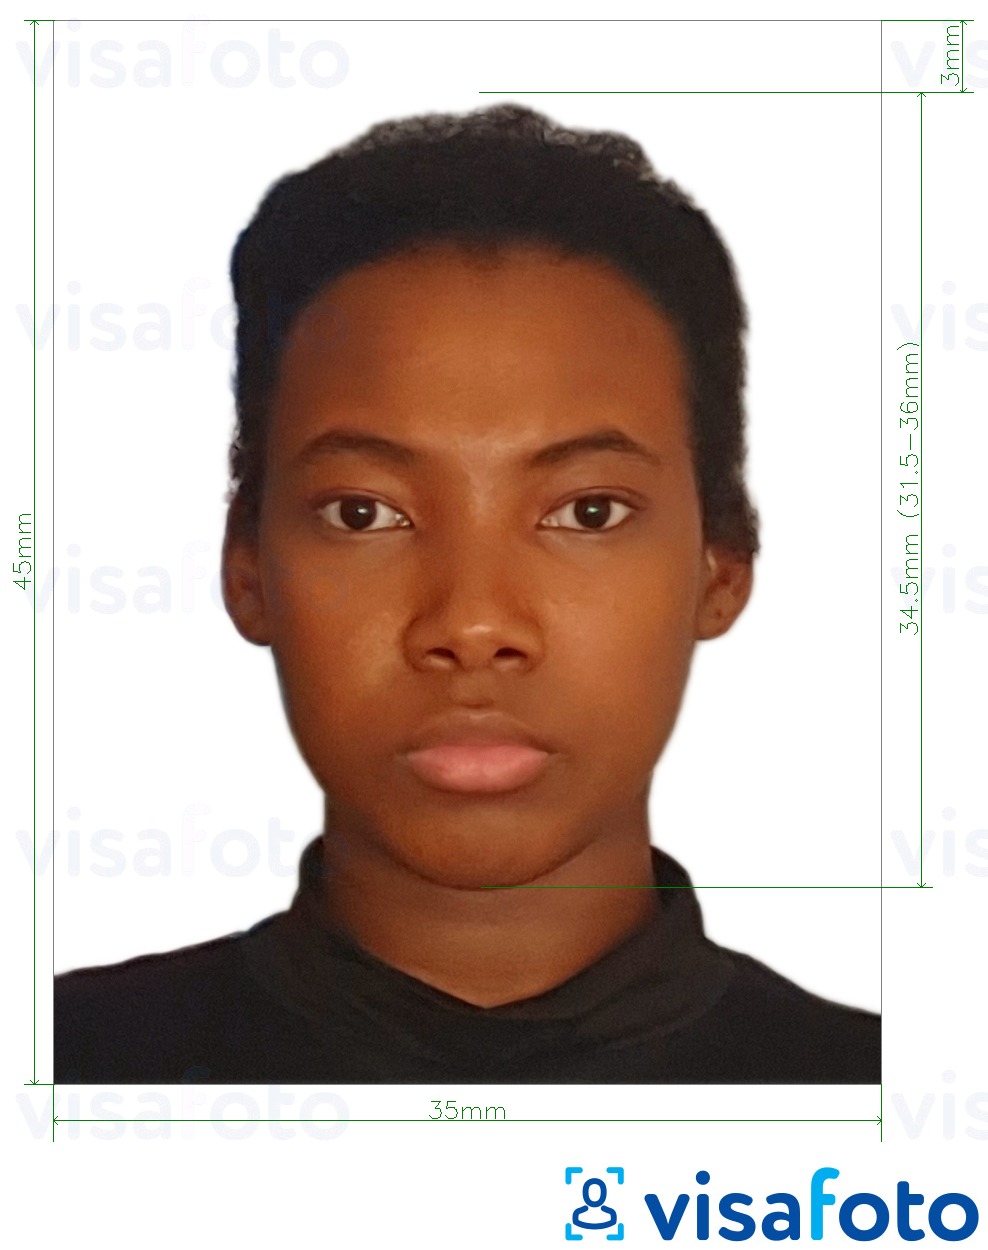  Burkina Faso pass 4,5x3,5 cm (45x35 mm) fotonäidis koos täpse infoga mõõtude kohta.